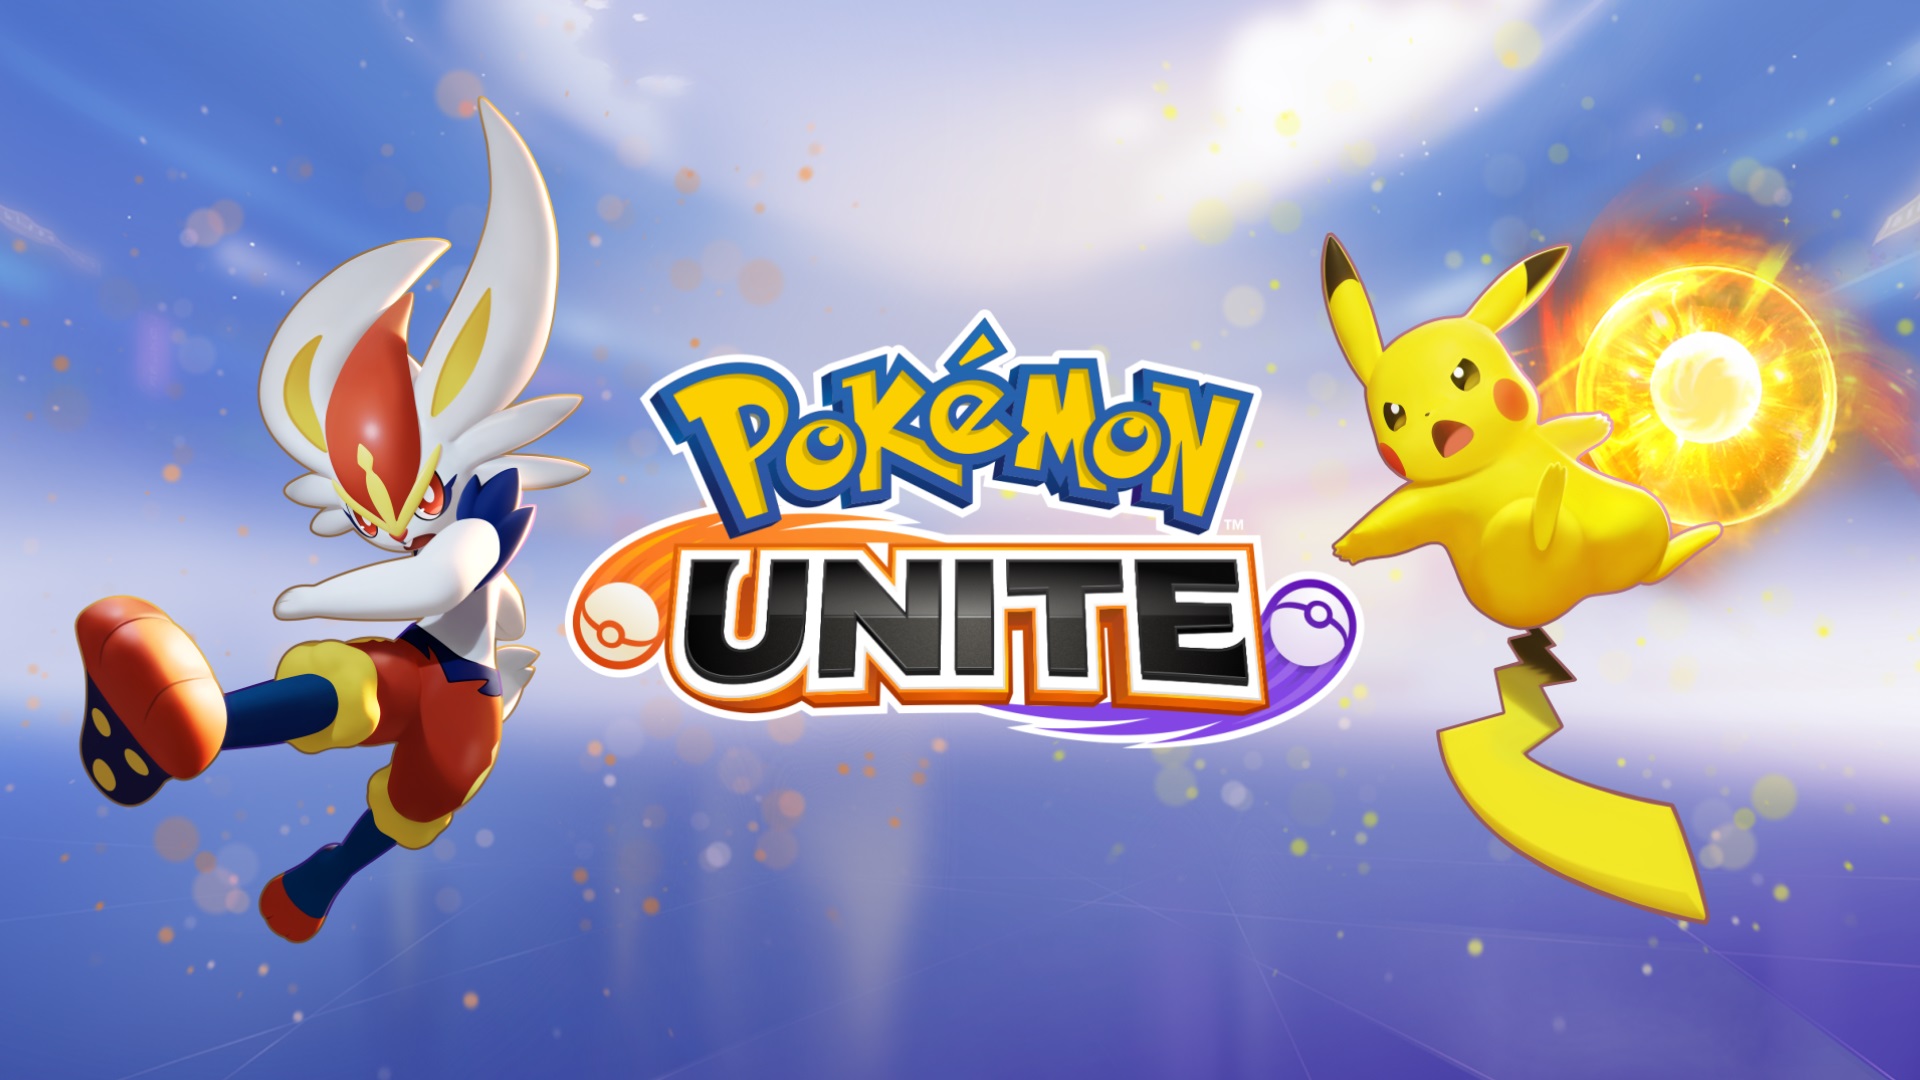 Pokémon Unite 07 15 21 1